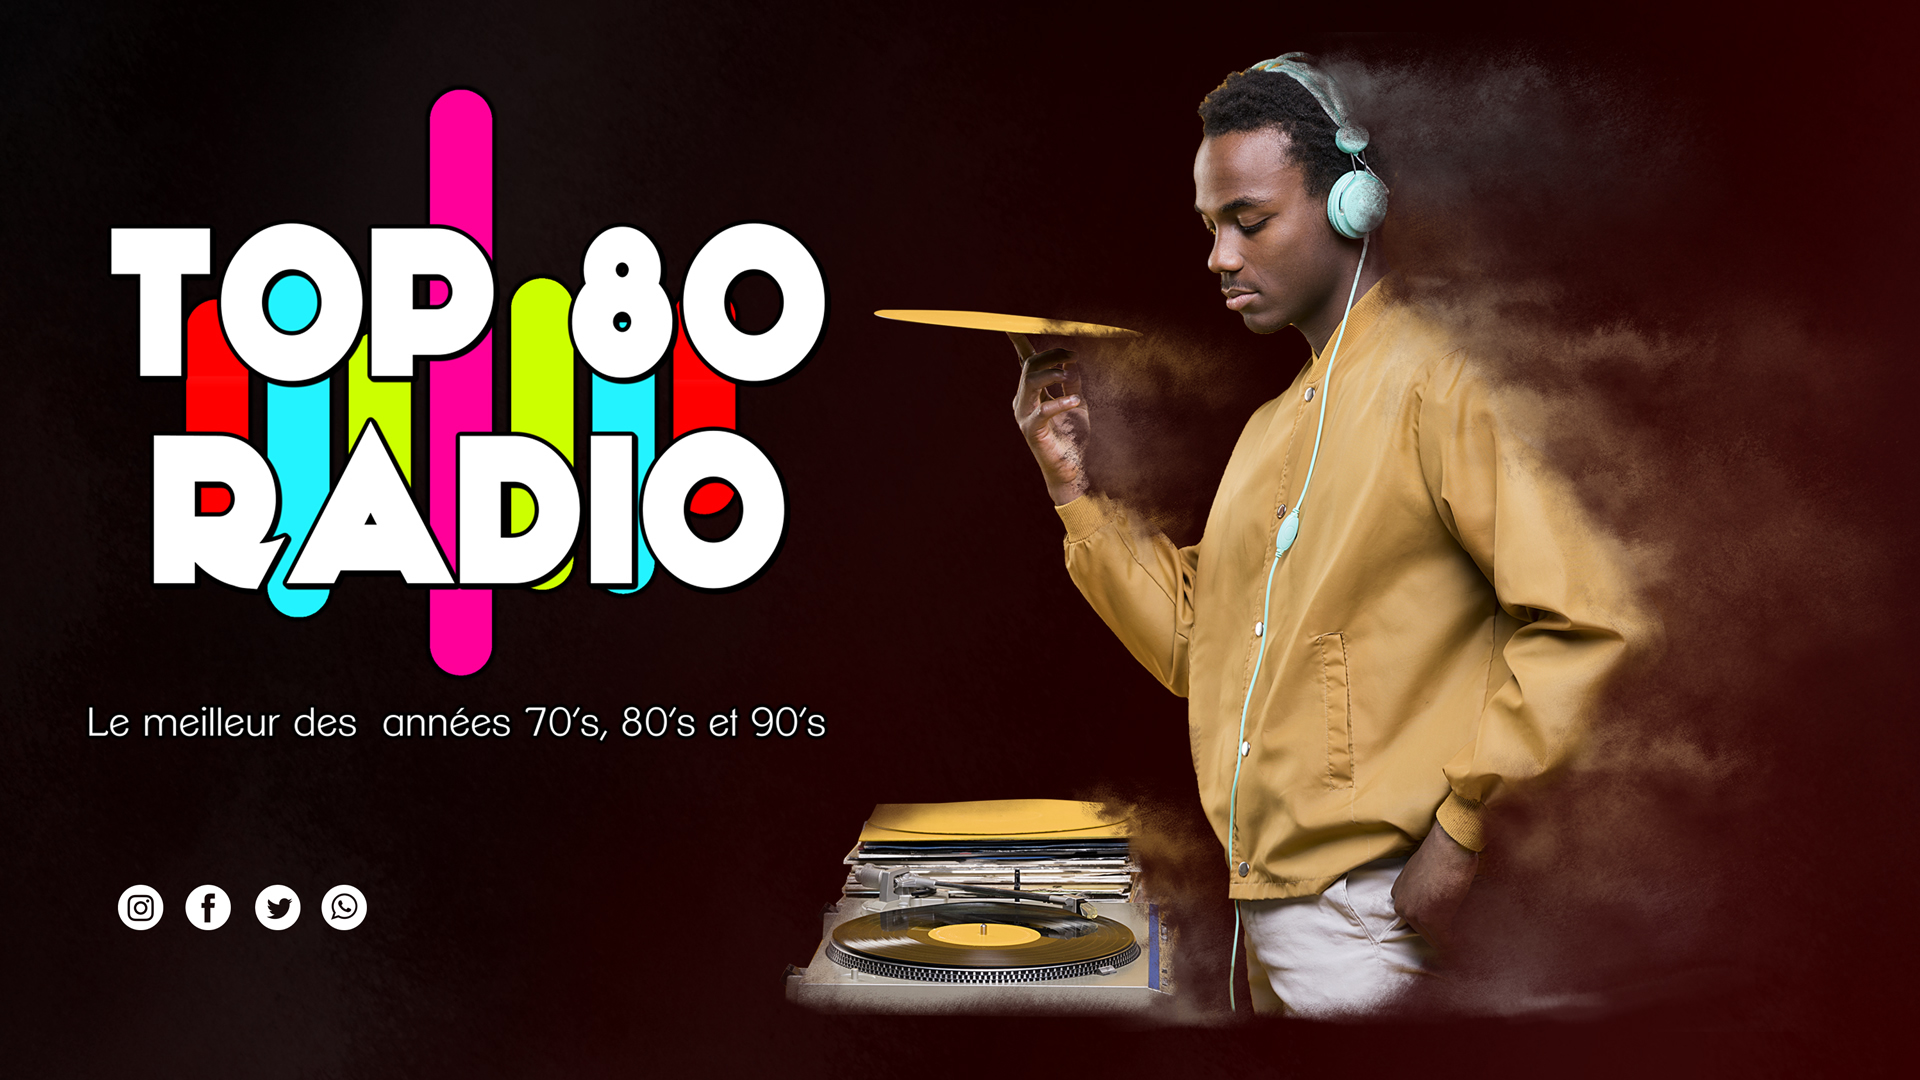 WALLPAPER–TOP-80-RADIO—34